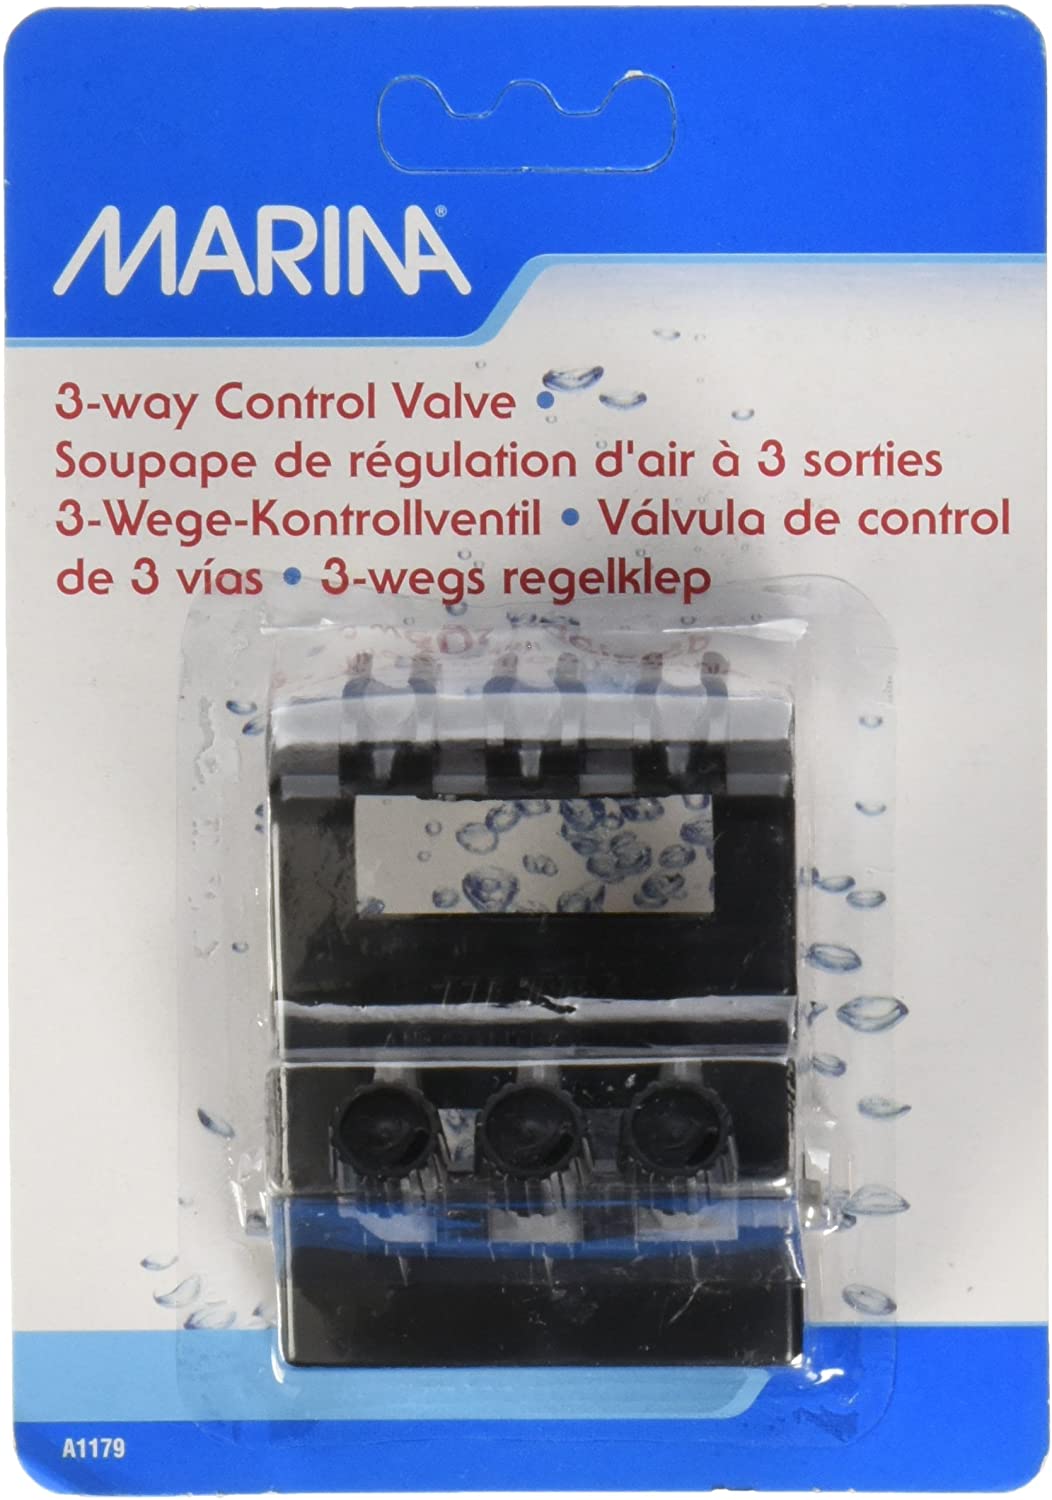 Marina - 3-way Control Valve Splitter